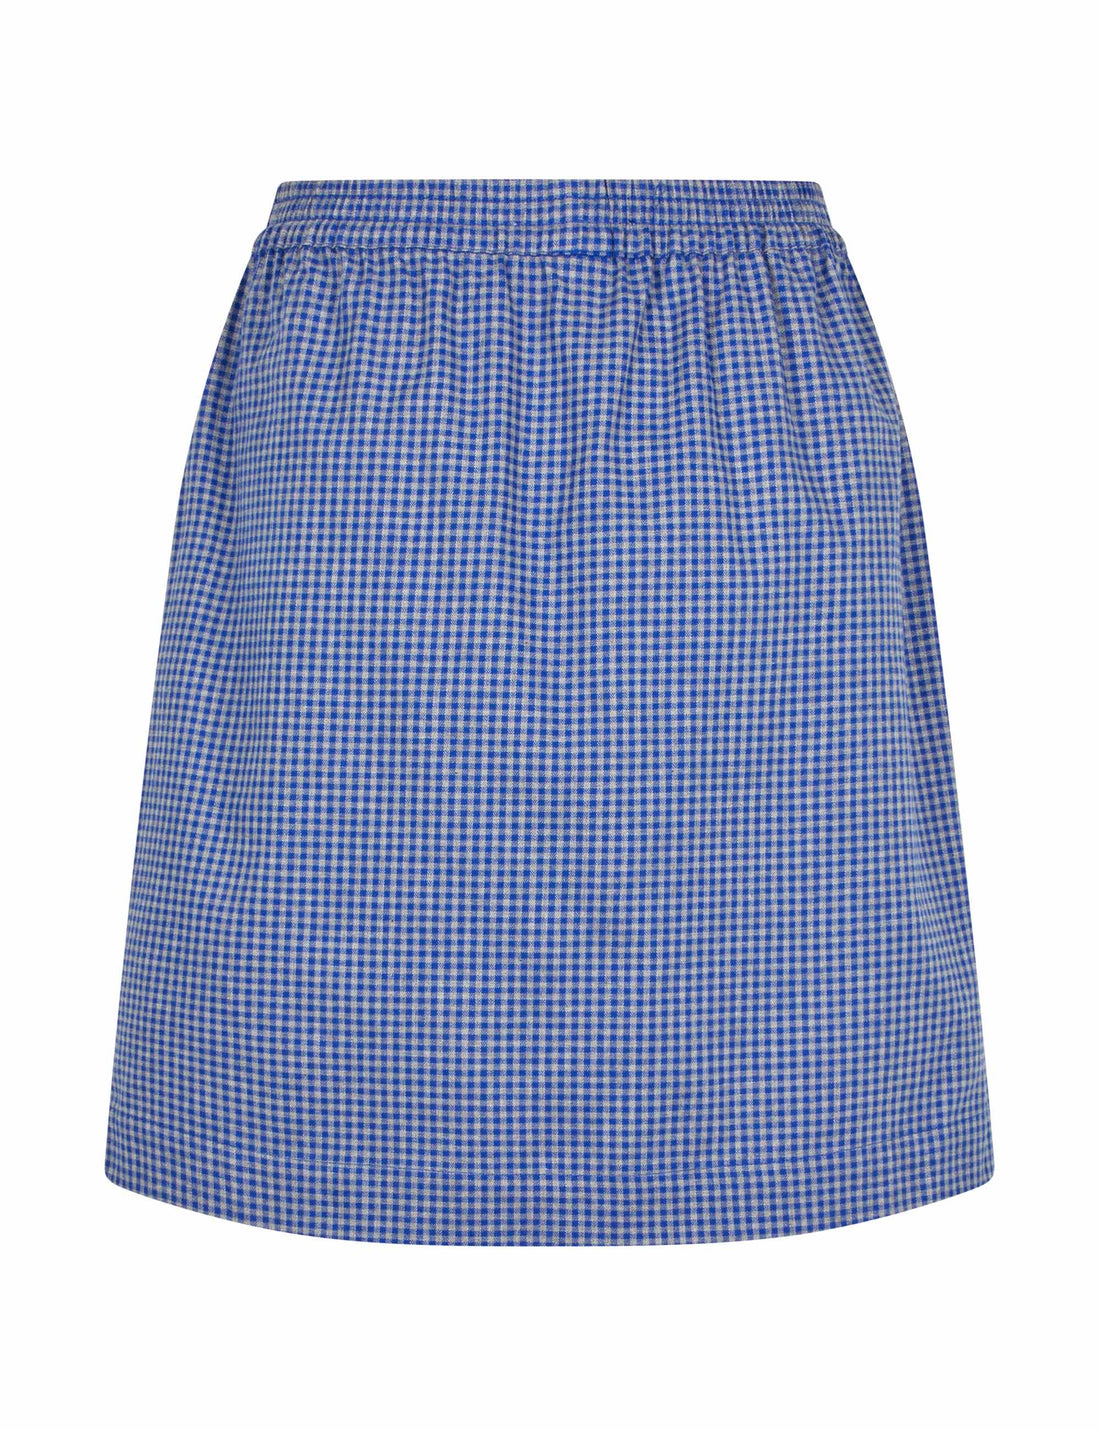 Kamille skirt grey/blue check